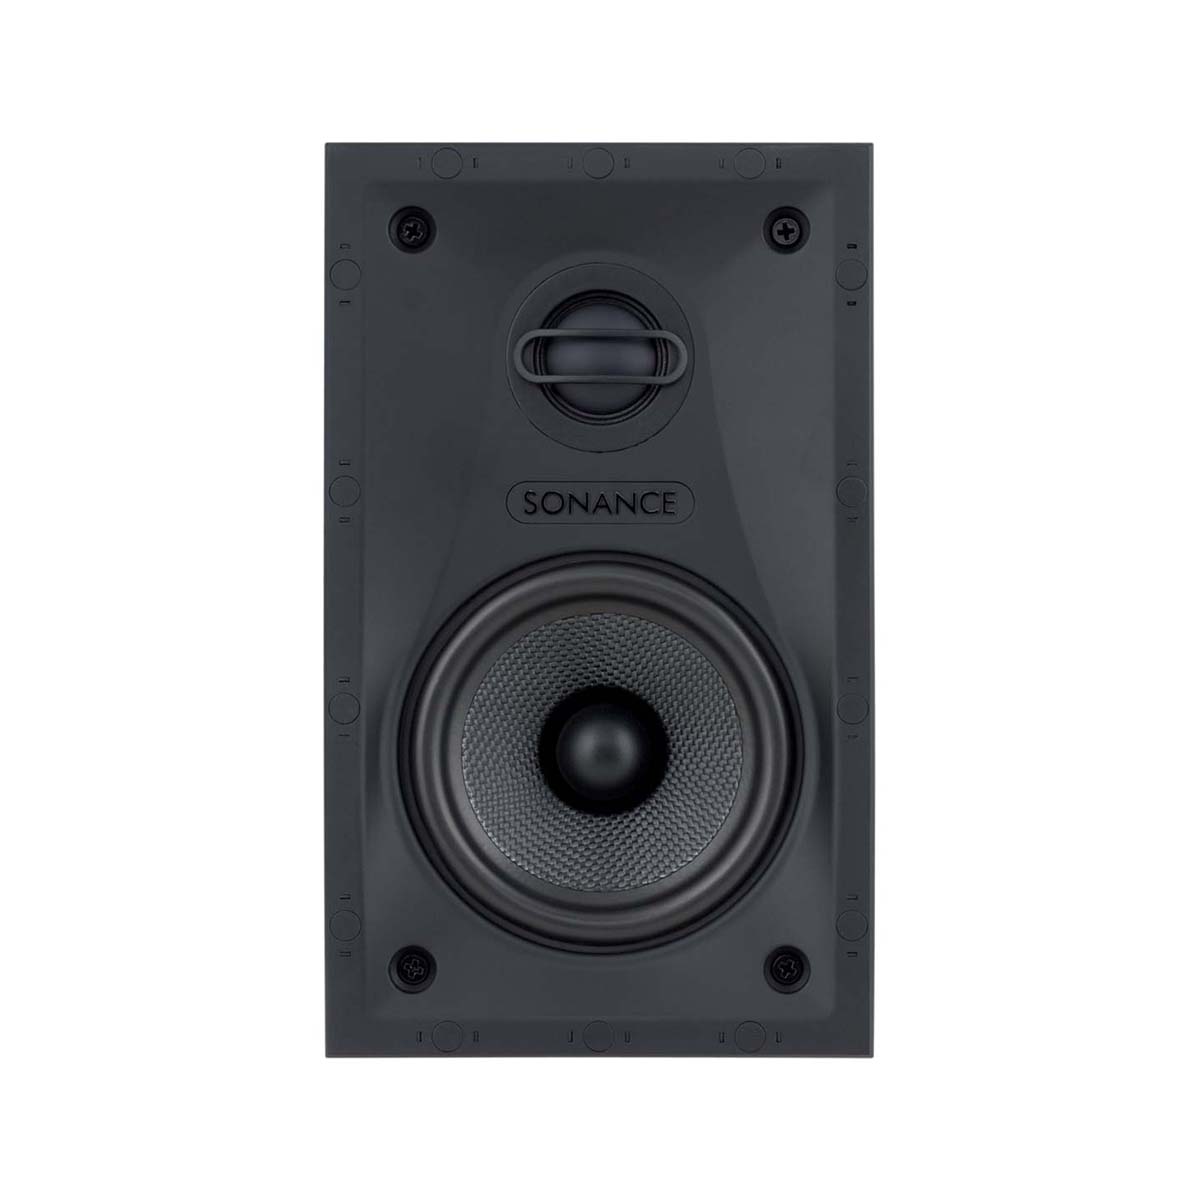 Sonance VP46 4.5" Rectangular Speakers pair